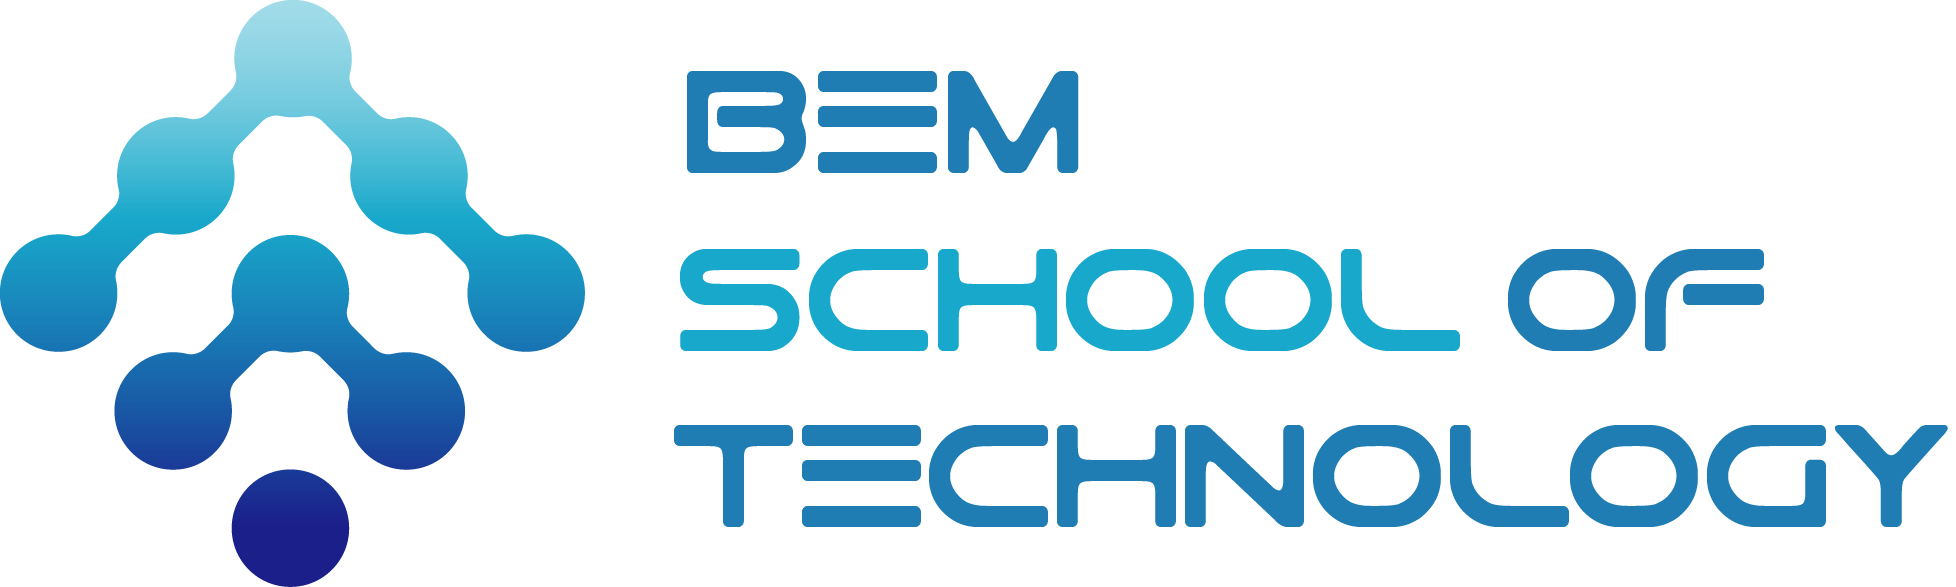 BEM School Of Technology